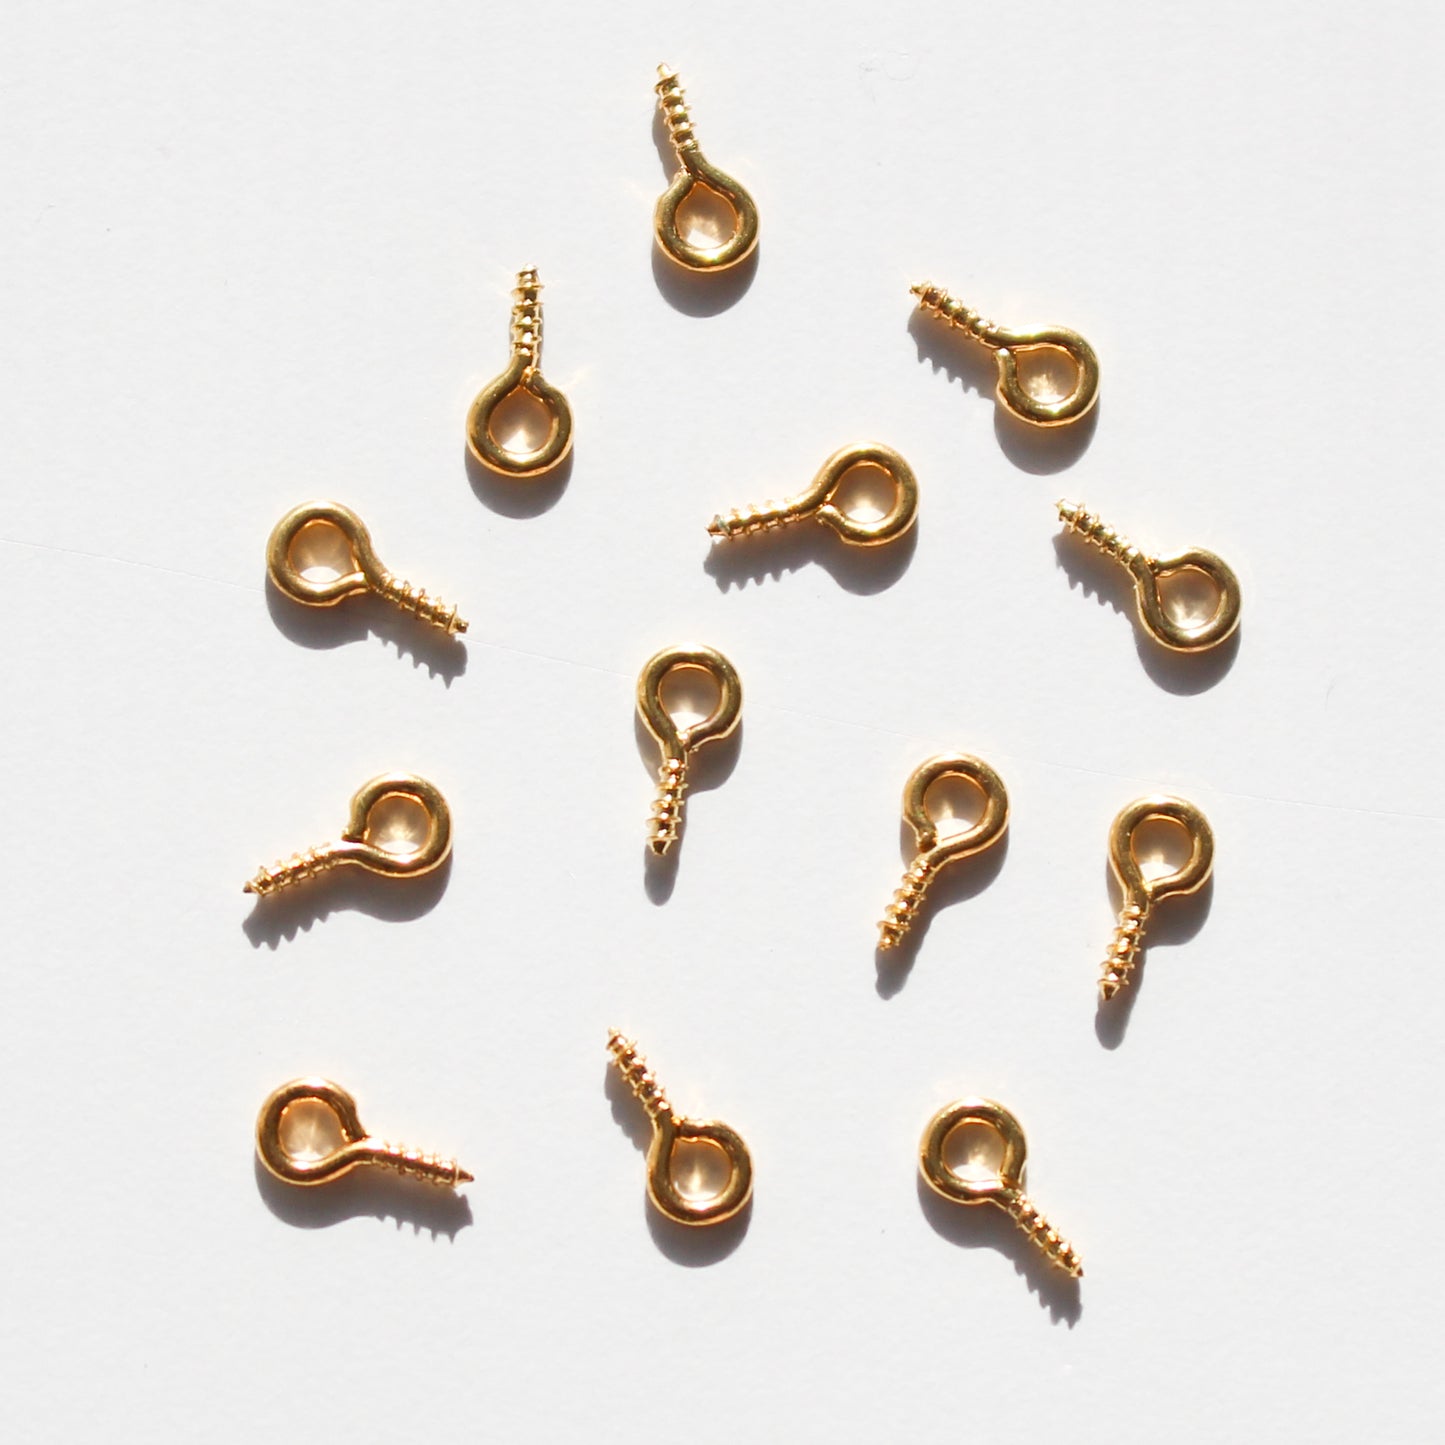 Gold Keychains & Eye Pins (New)